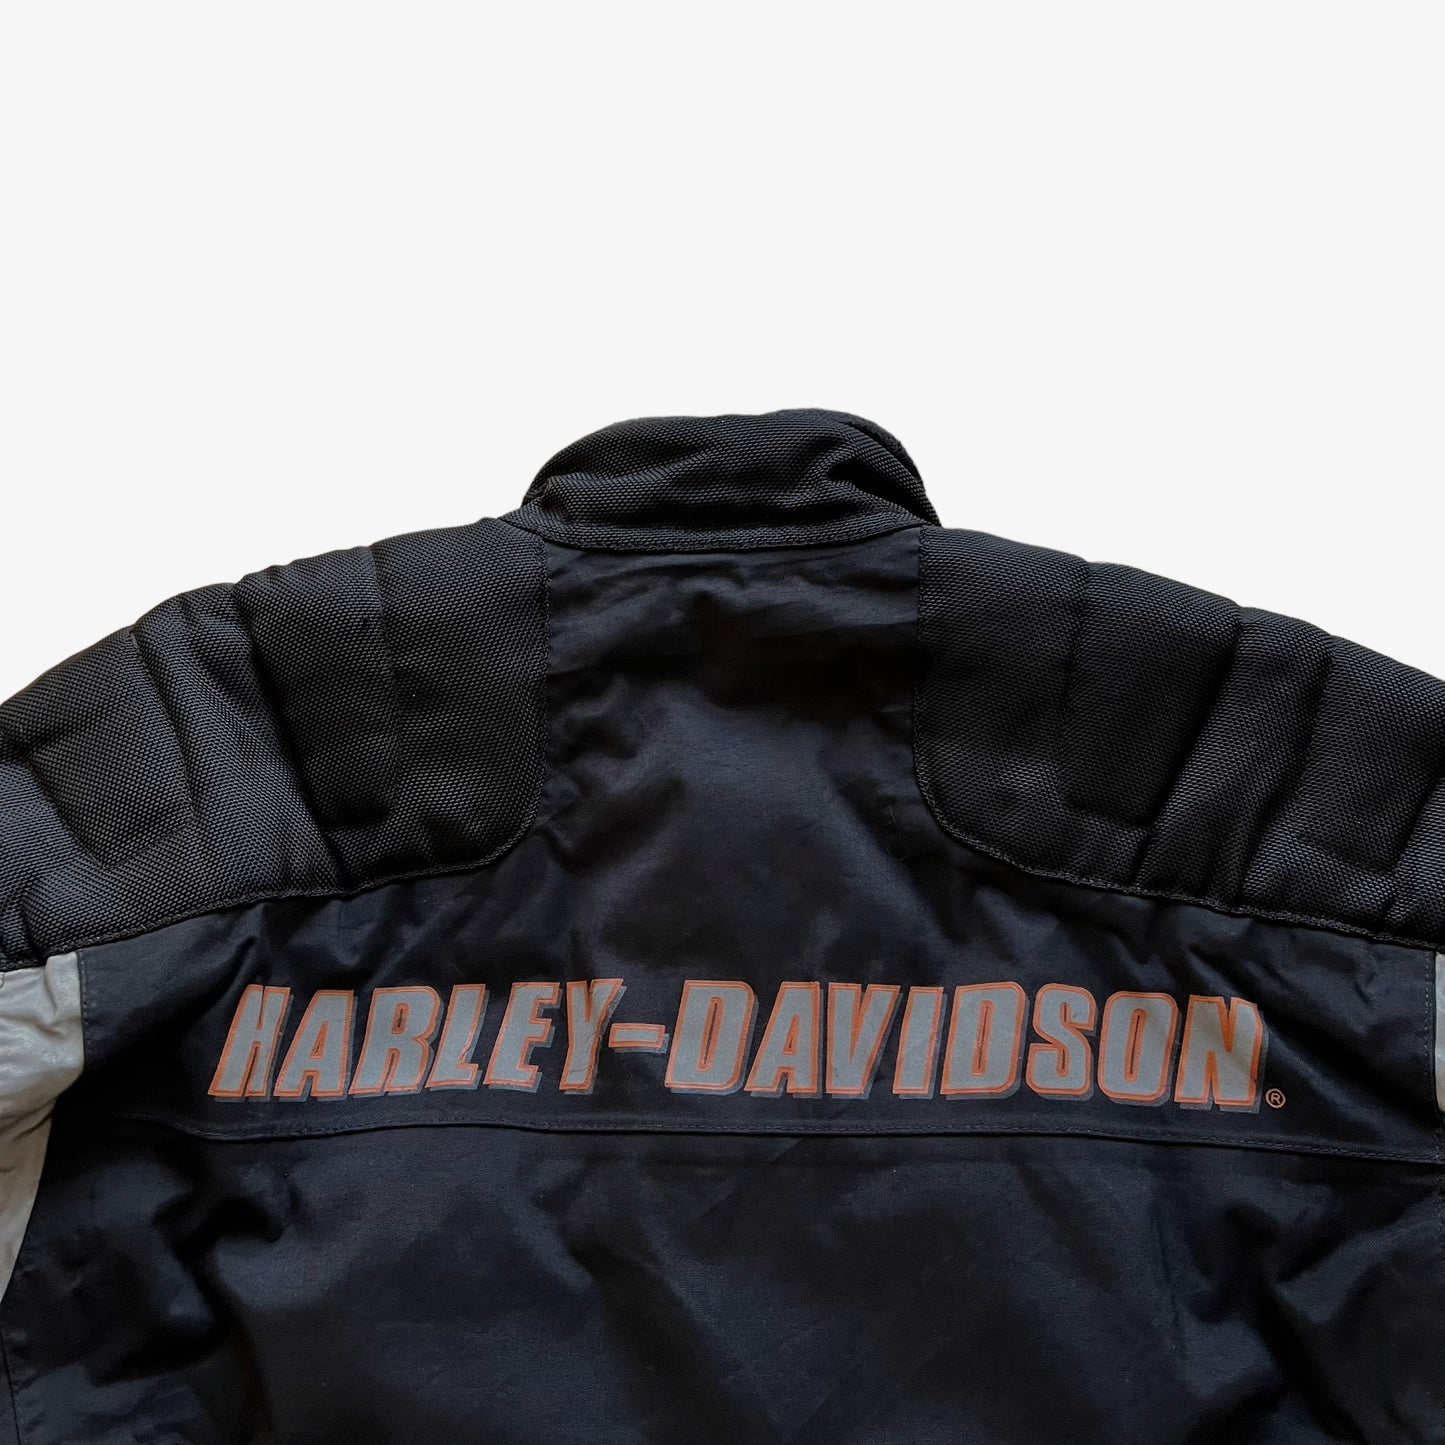 Vintage 90s Harley Davidson FXRG Padded Biker Jacket With Back Spell Out Logo - Casspios Dream